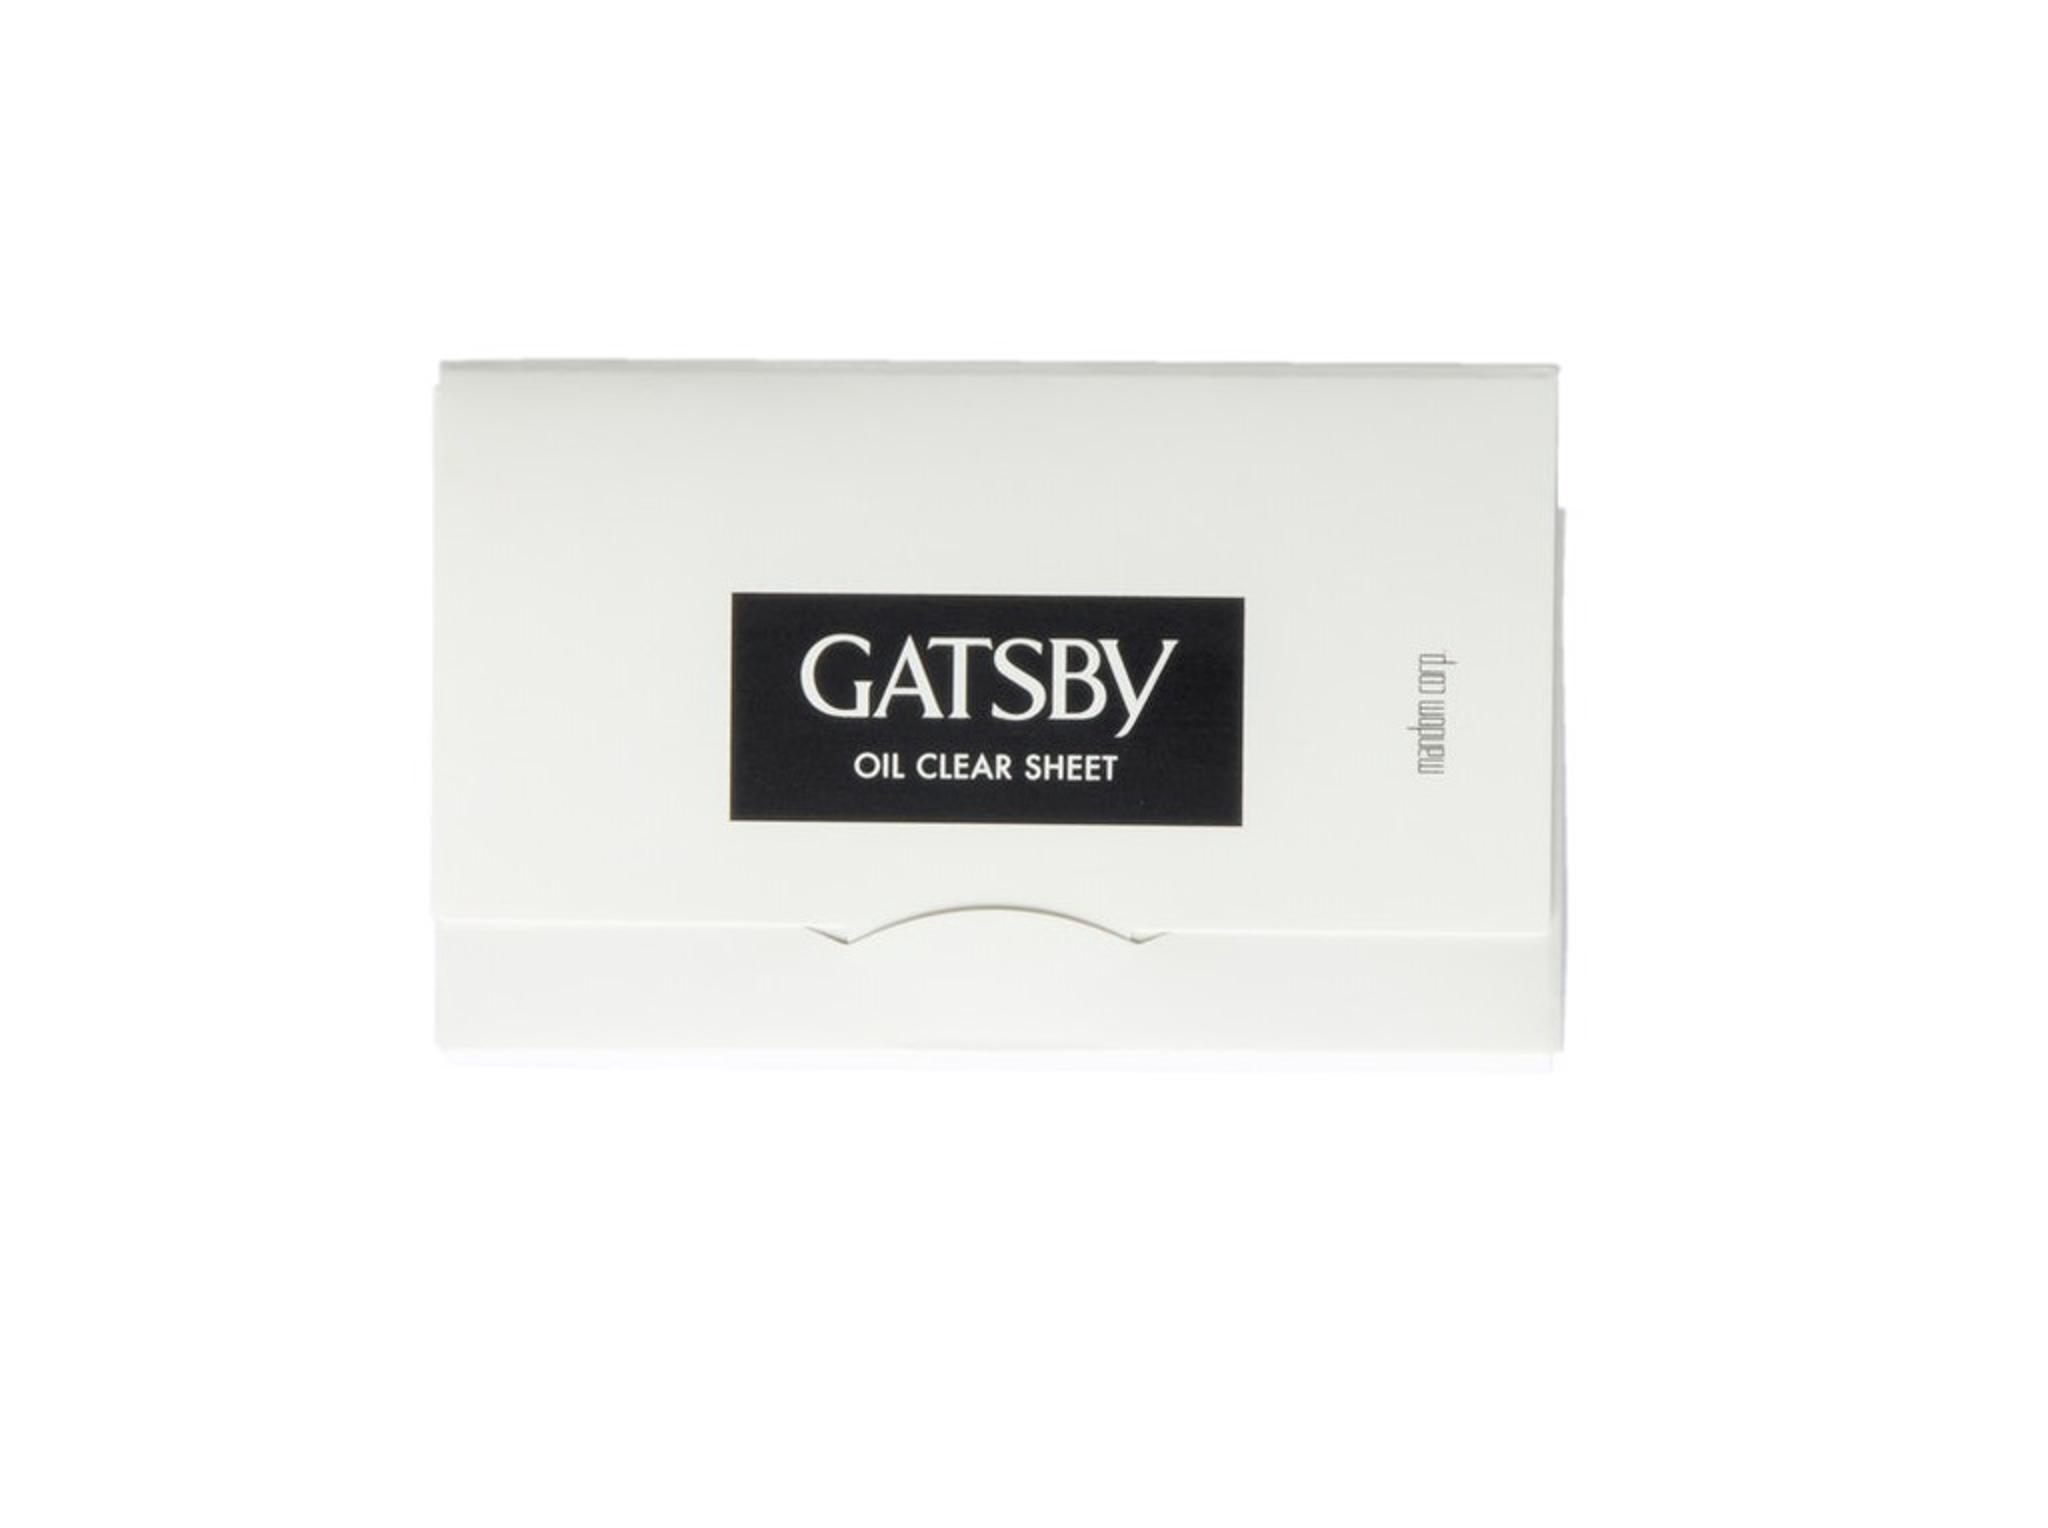 GATSBY - Oil Clear Sheet - 70 Sheets  3500